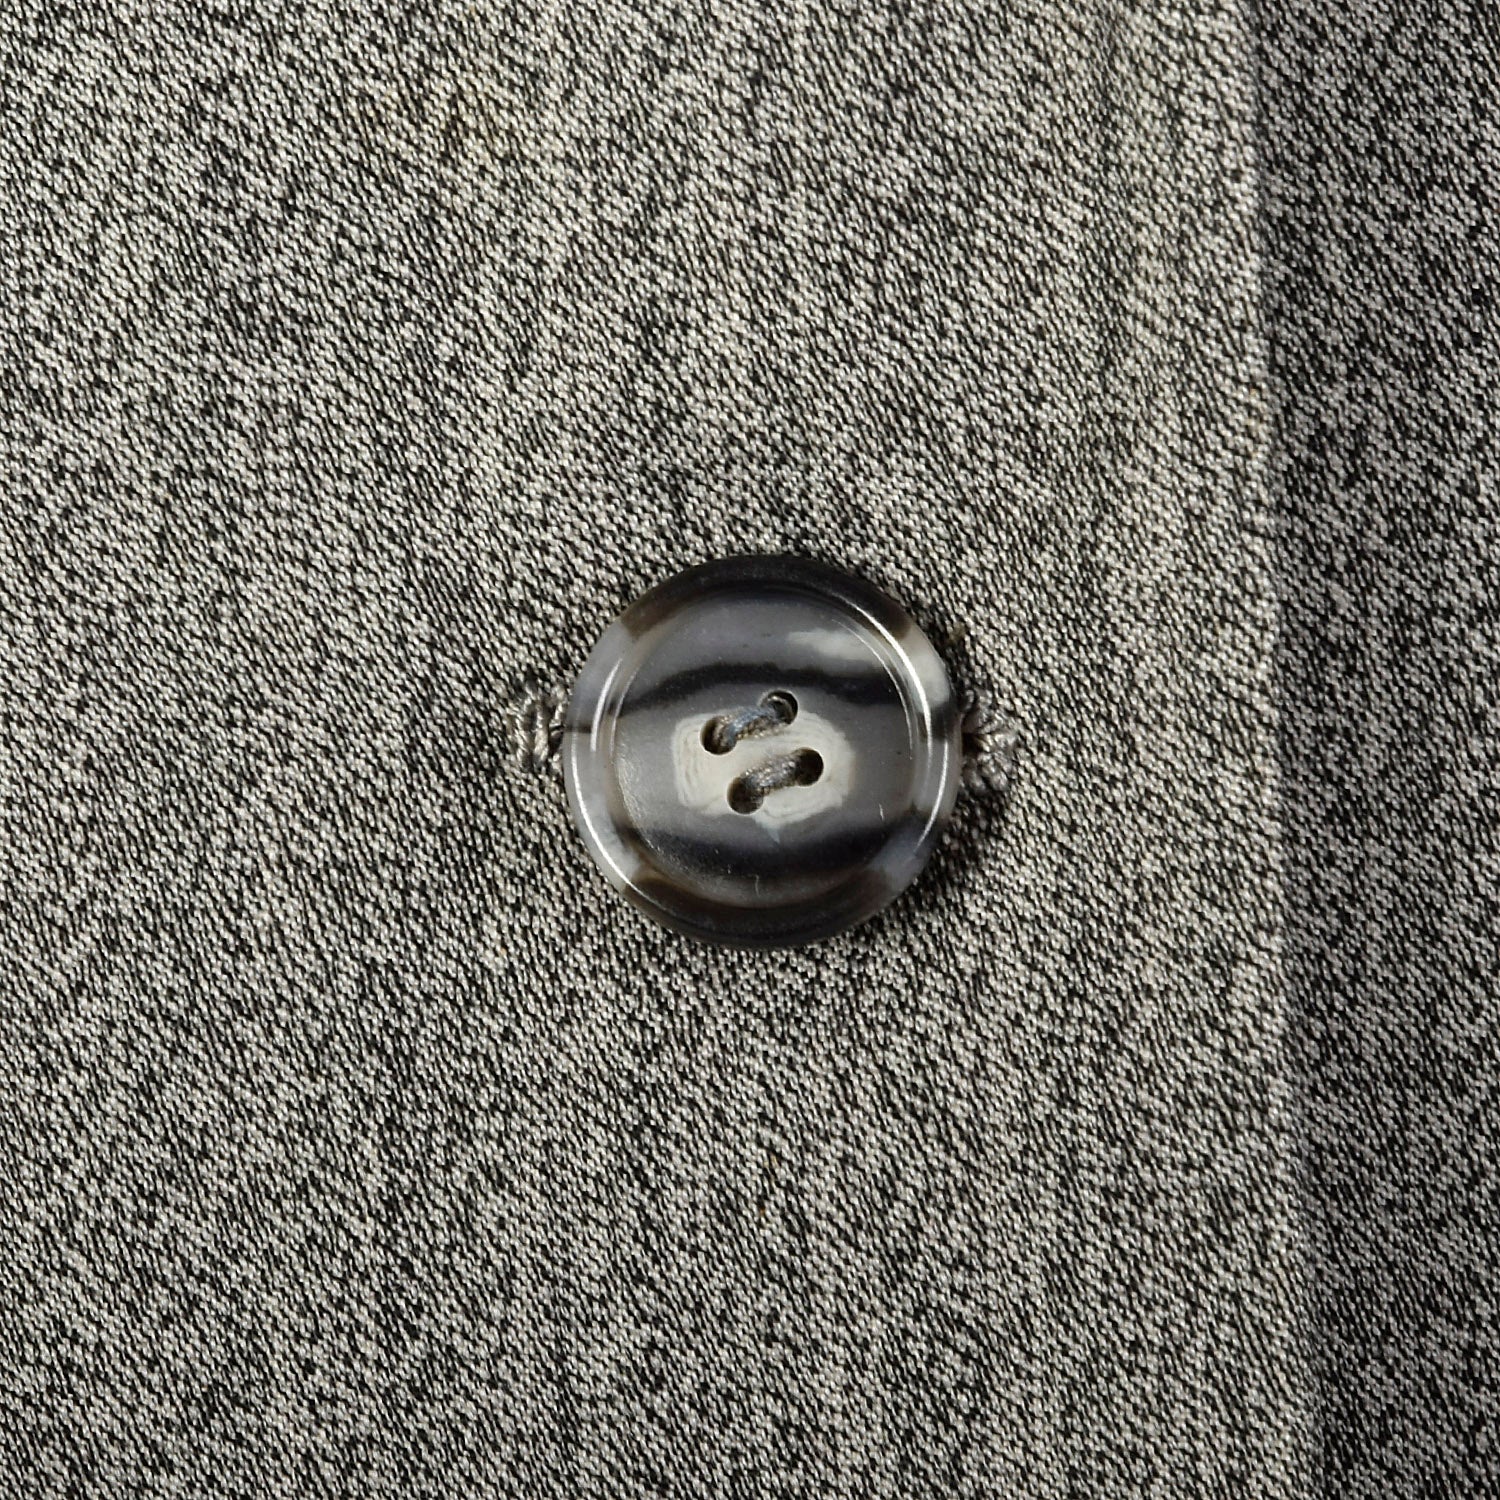 Medium Bill Blass 1980s Gray Wool Skirt Suit